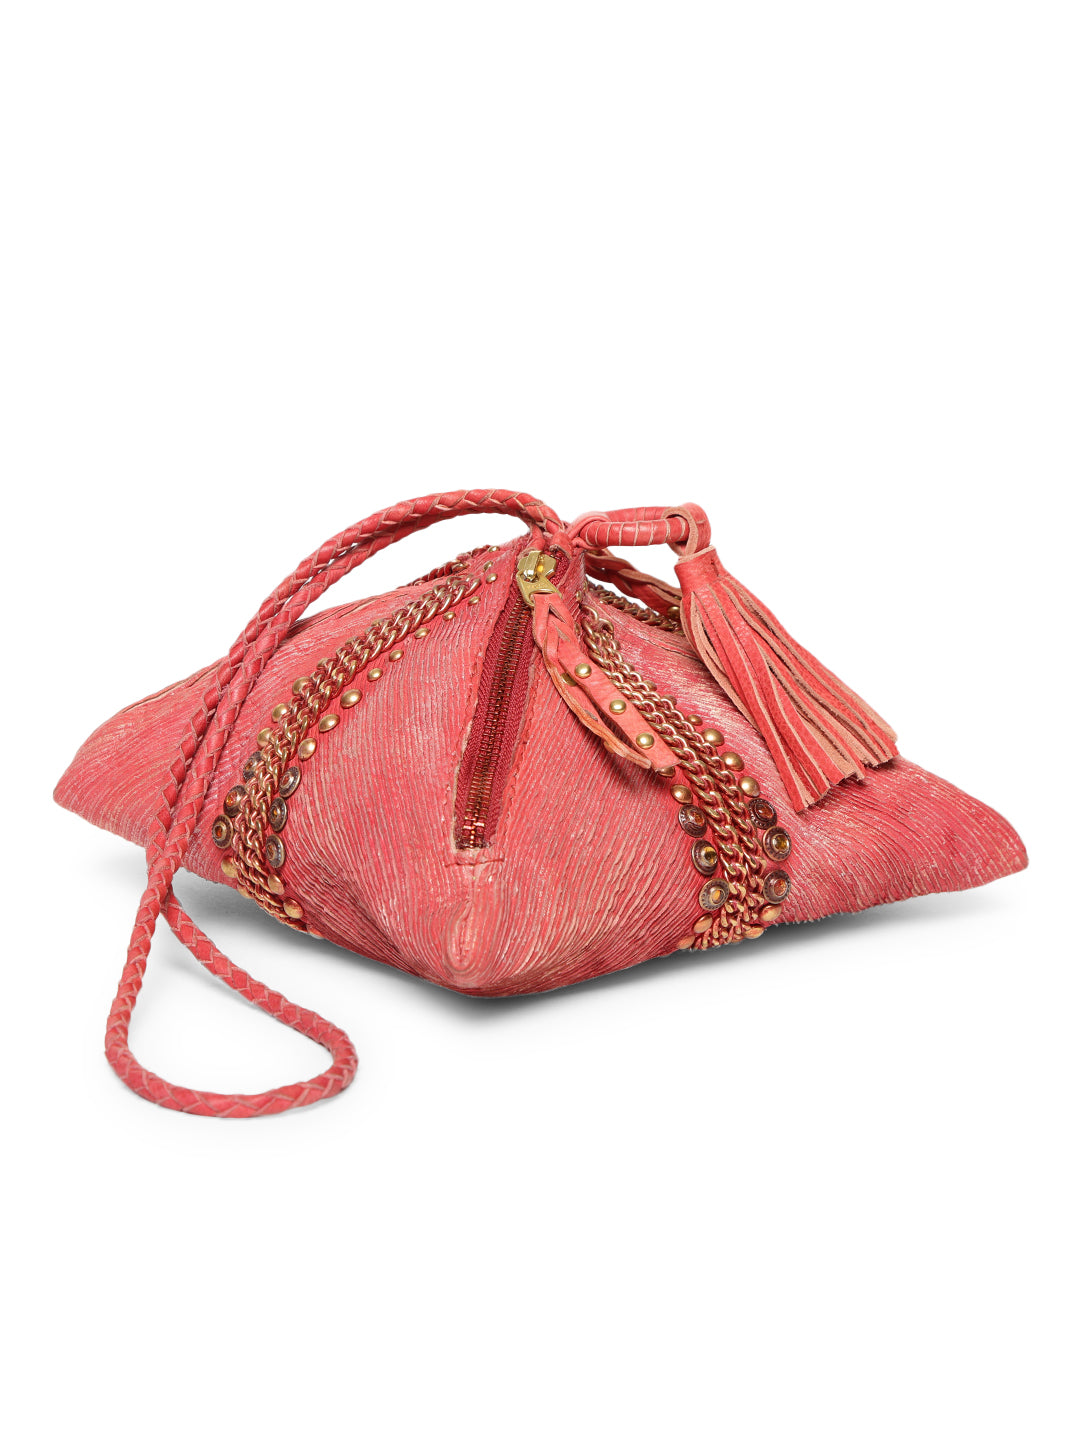 SILVIA: Red Sleek Leather Bag in Triangular Form By Art N Vintage